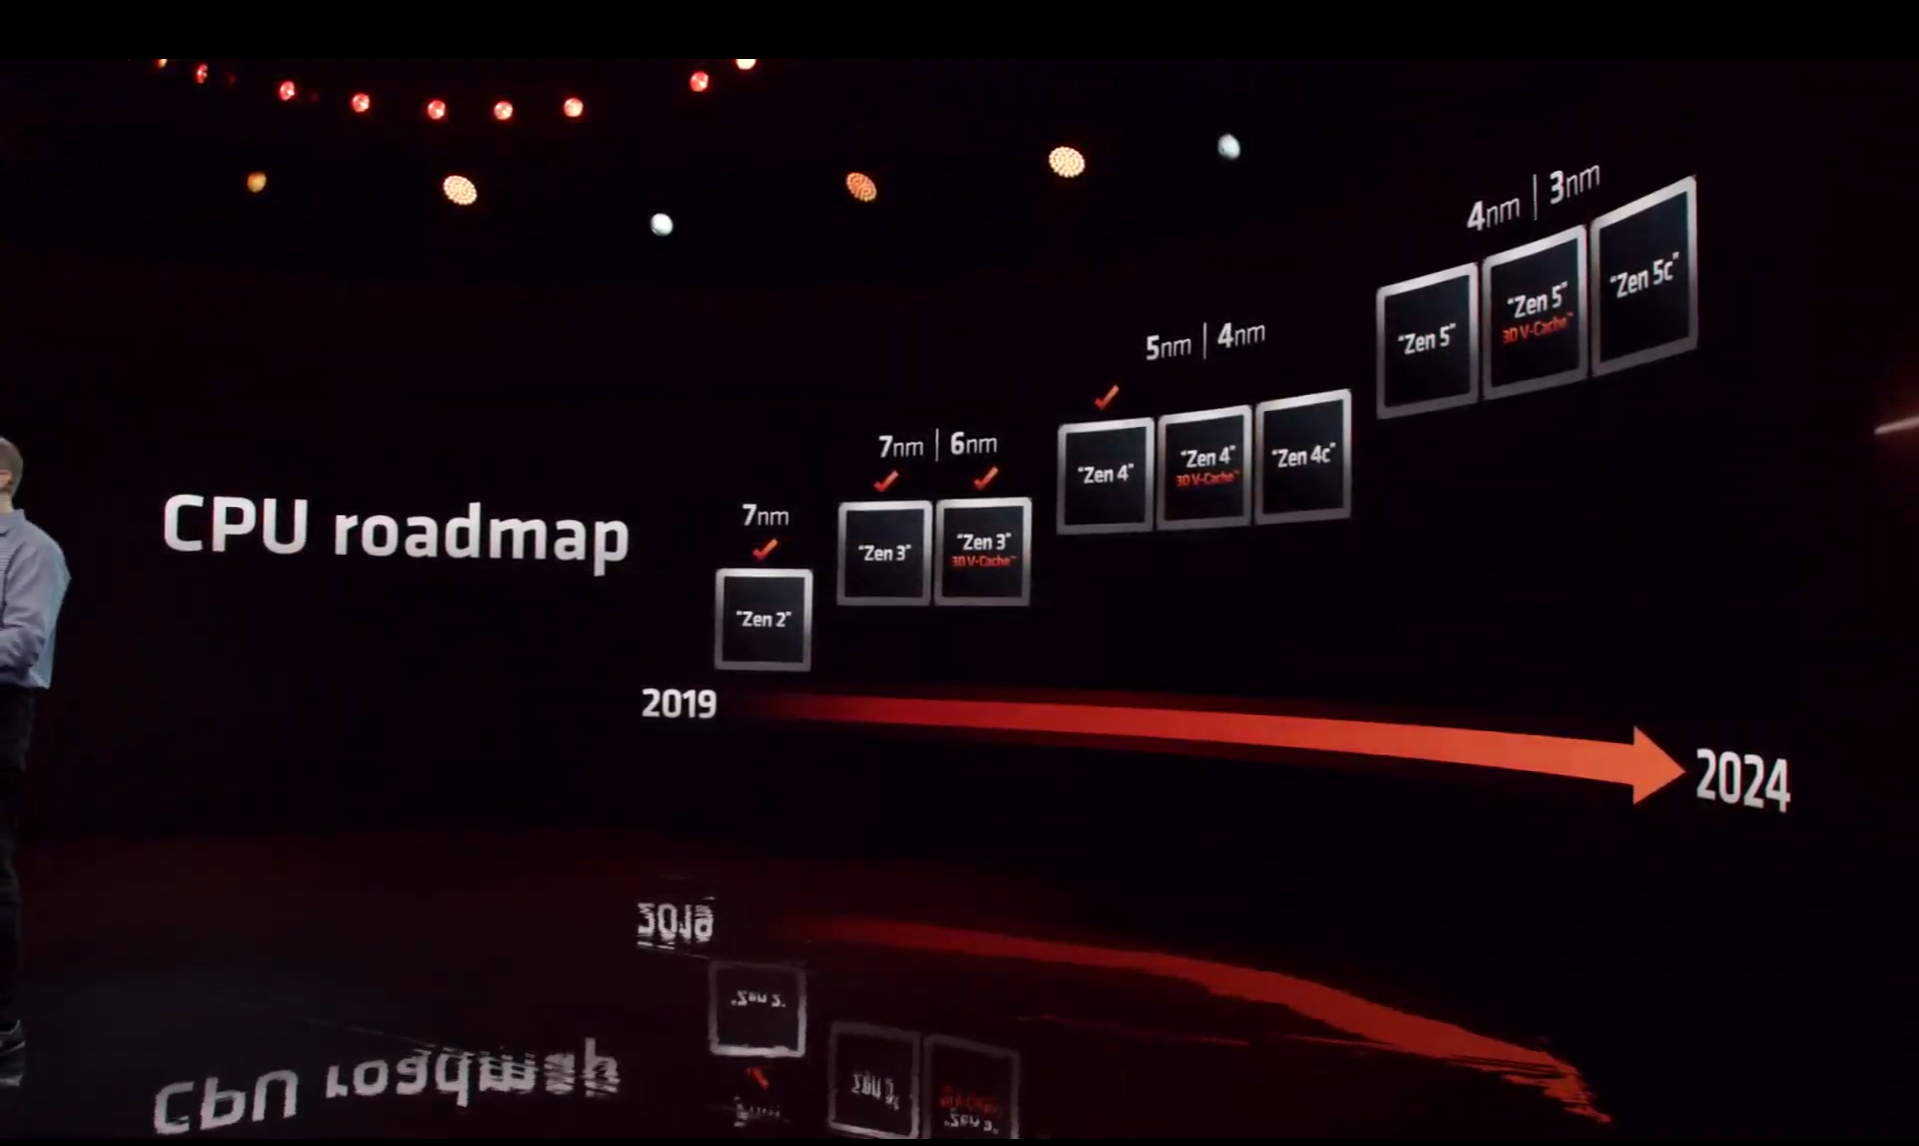 Papermaster shows CPU roadmap